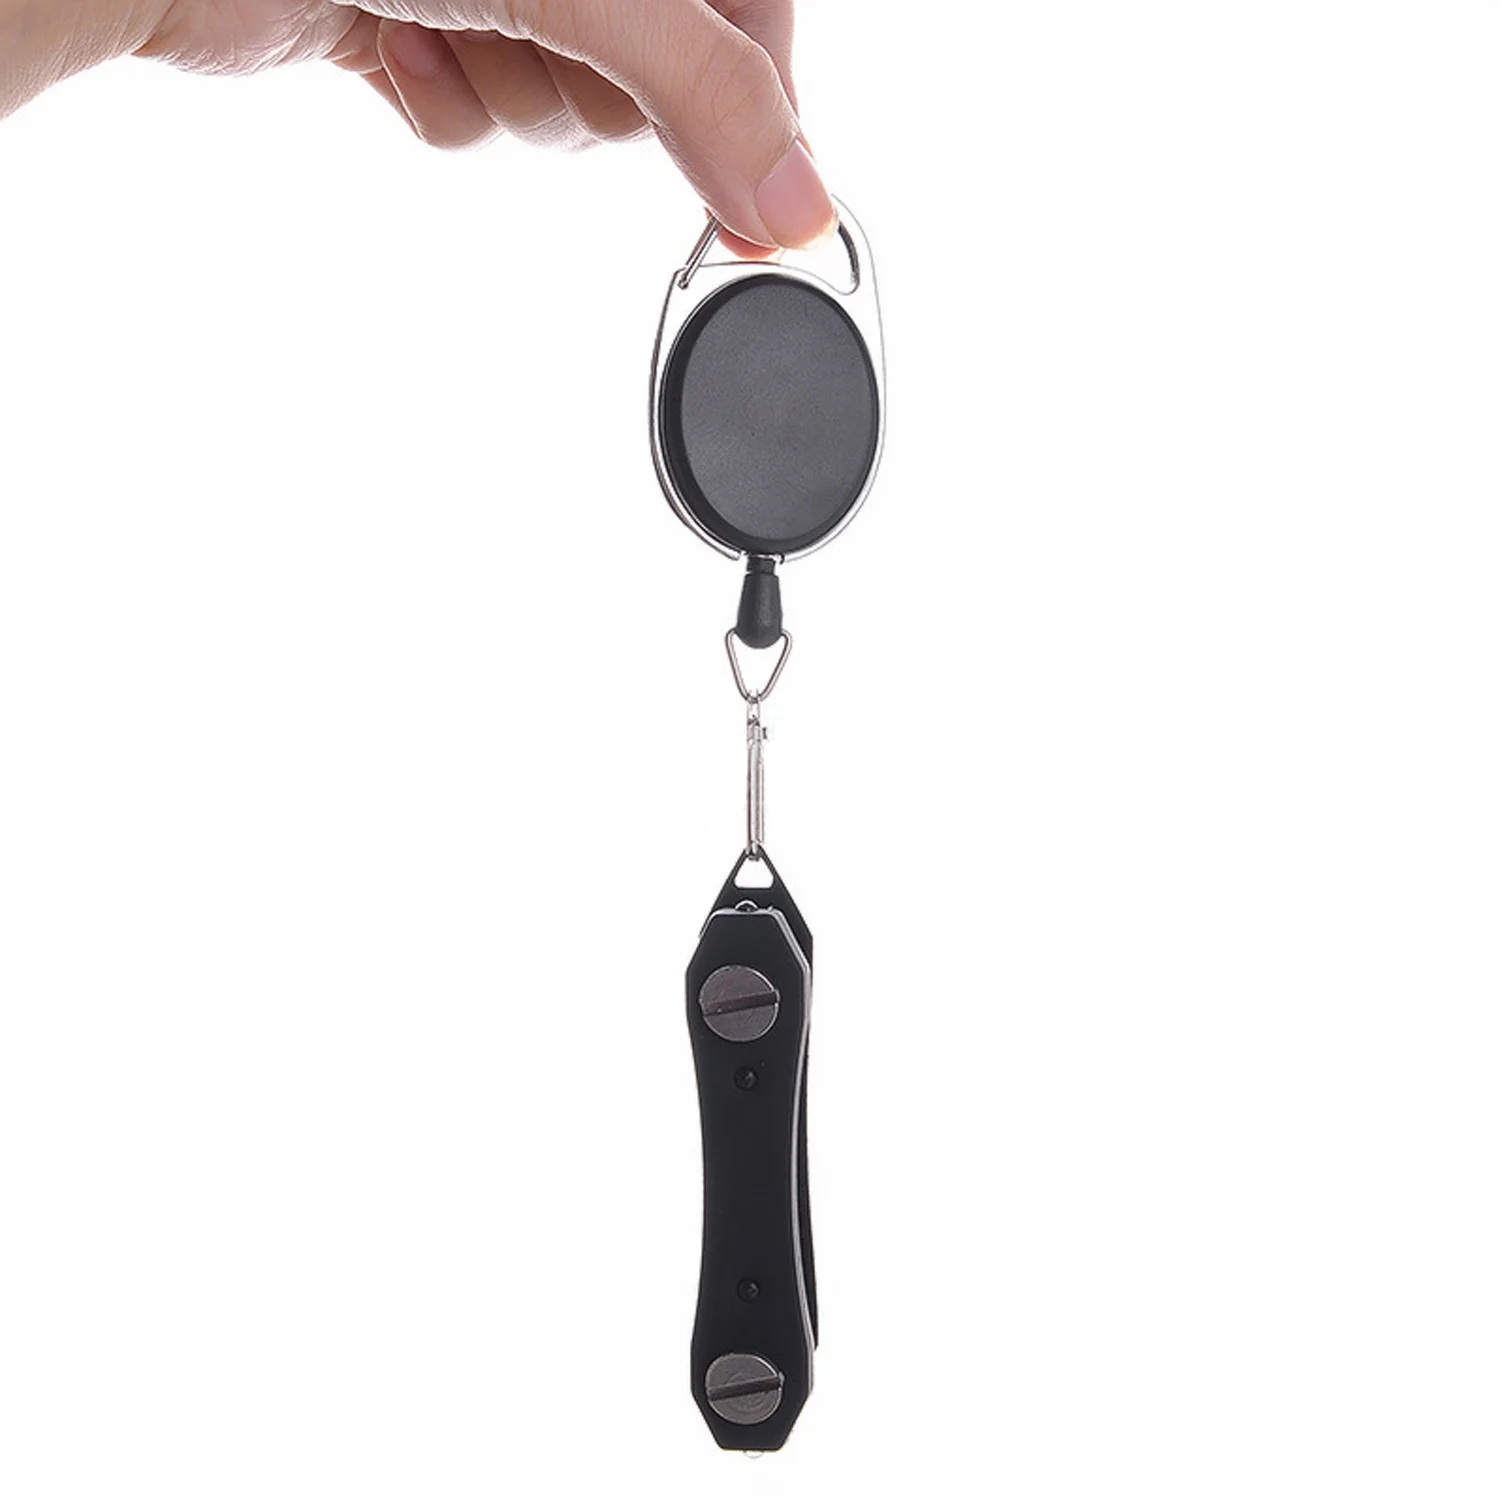 2pcs/Set Retractable Badge Holder Reel Key Ring Badge Reel with Carabiner Reel Clip on Bus Card ID Card Name Tag Badge Holder